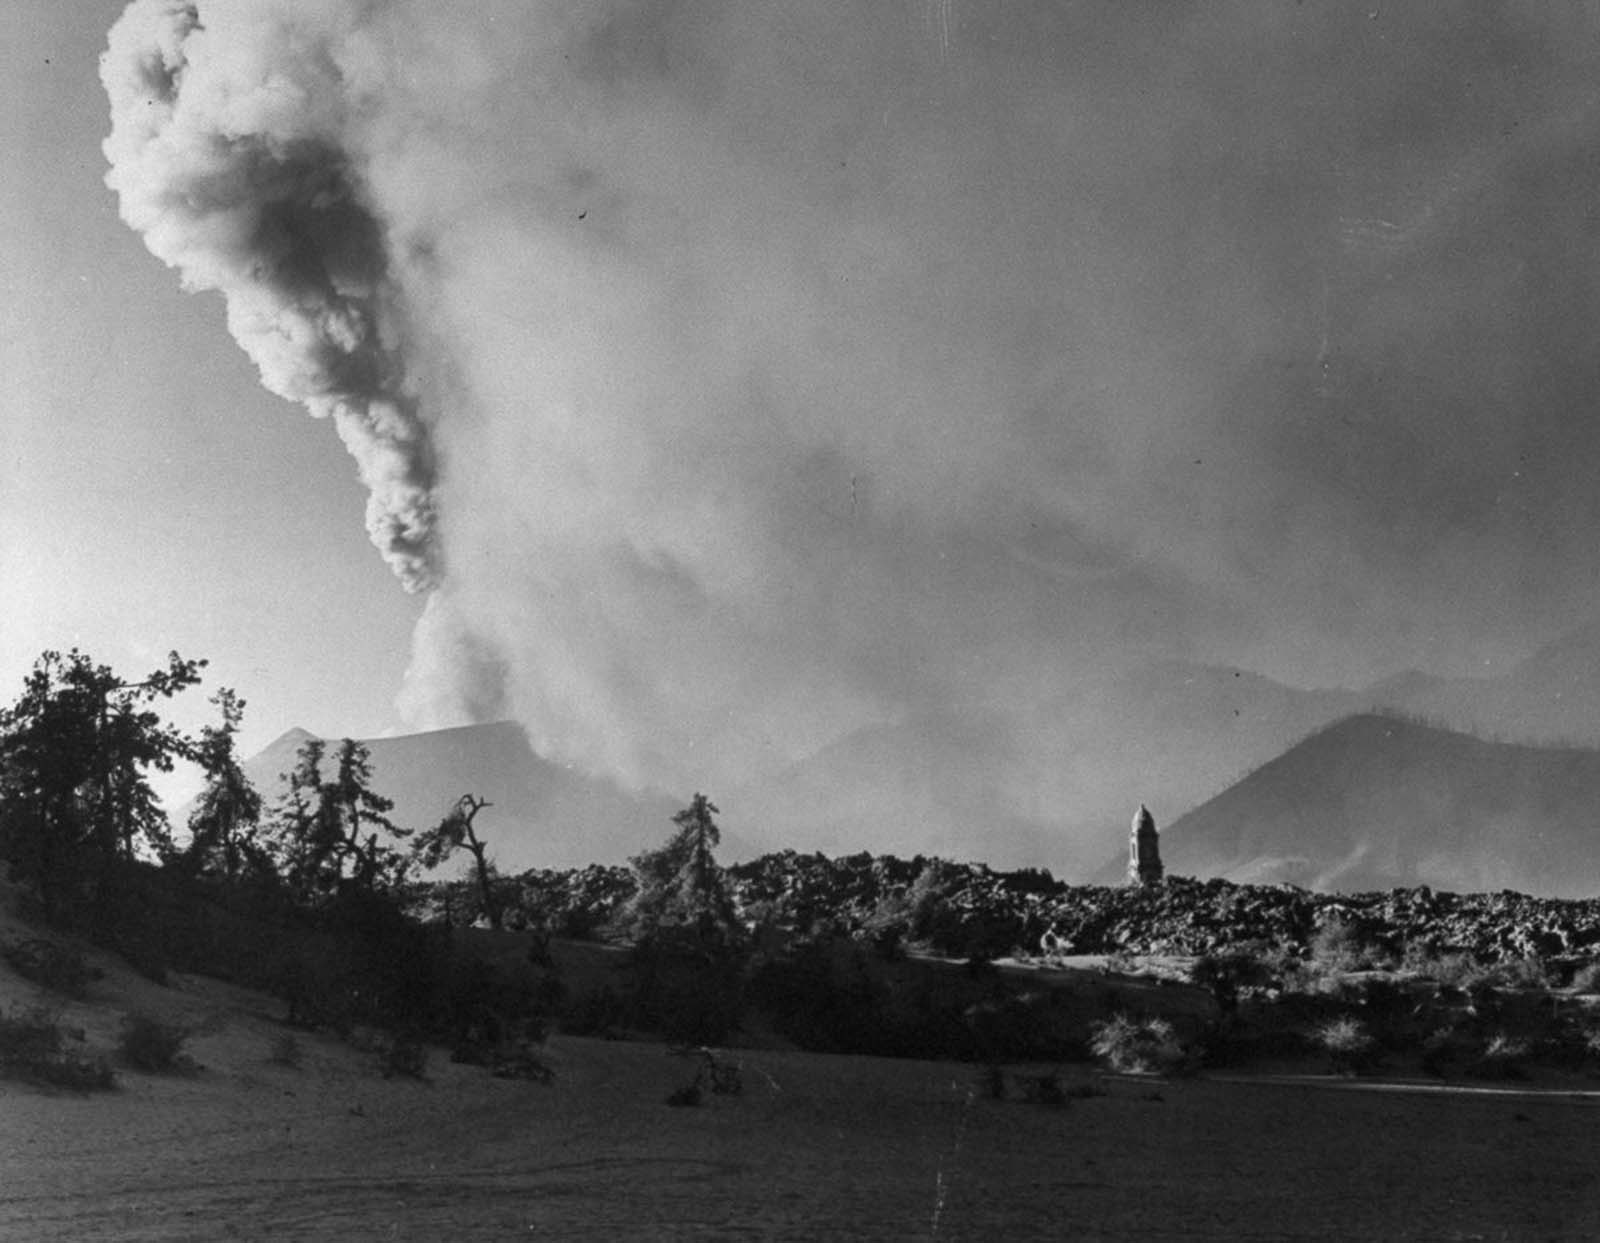 Paricutin volcano eruption photographs